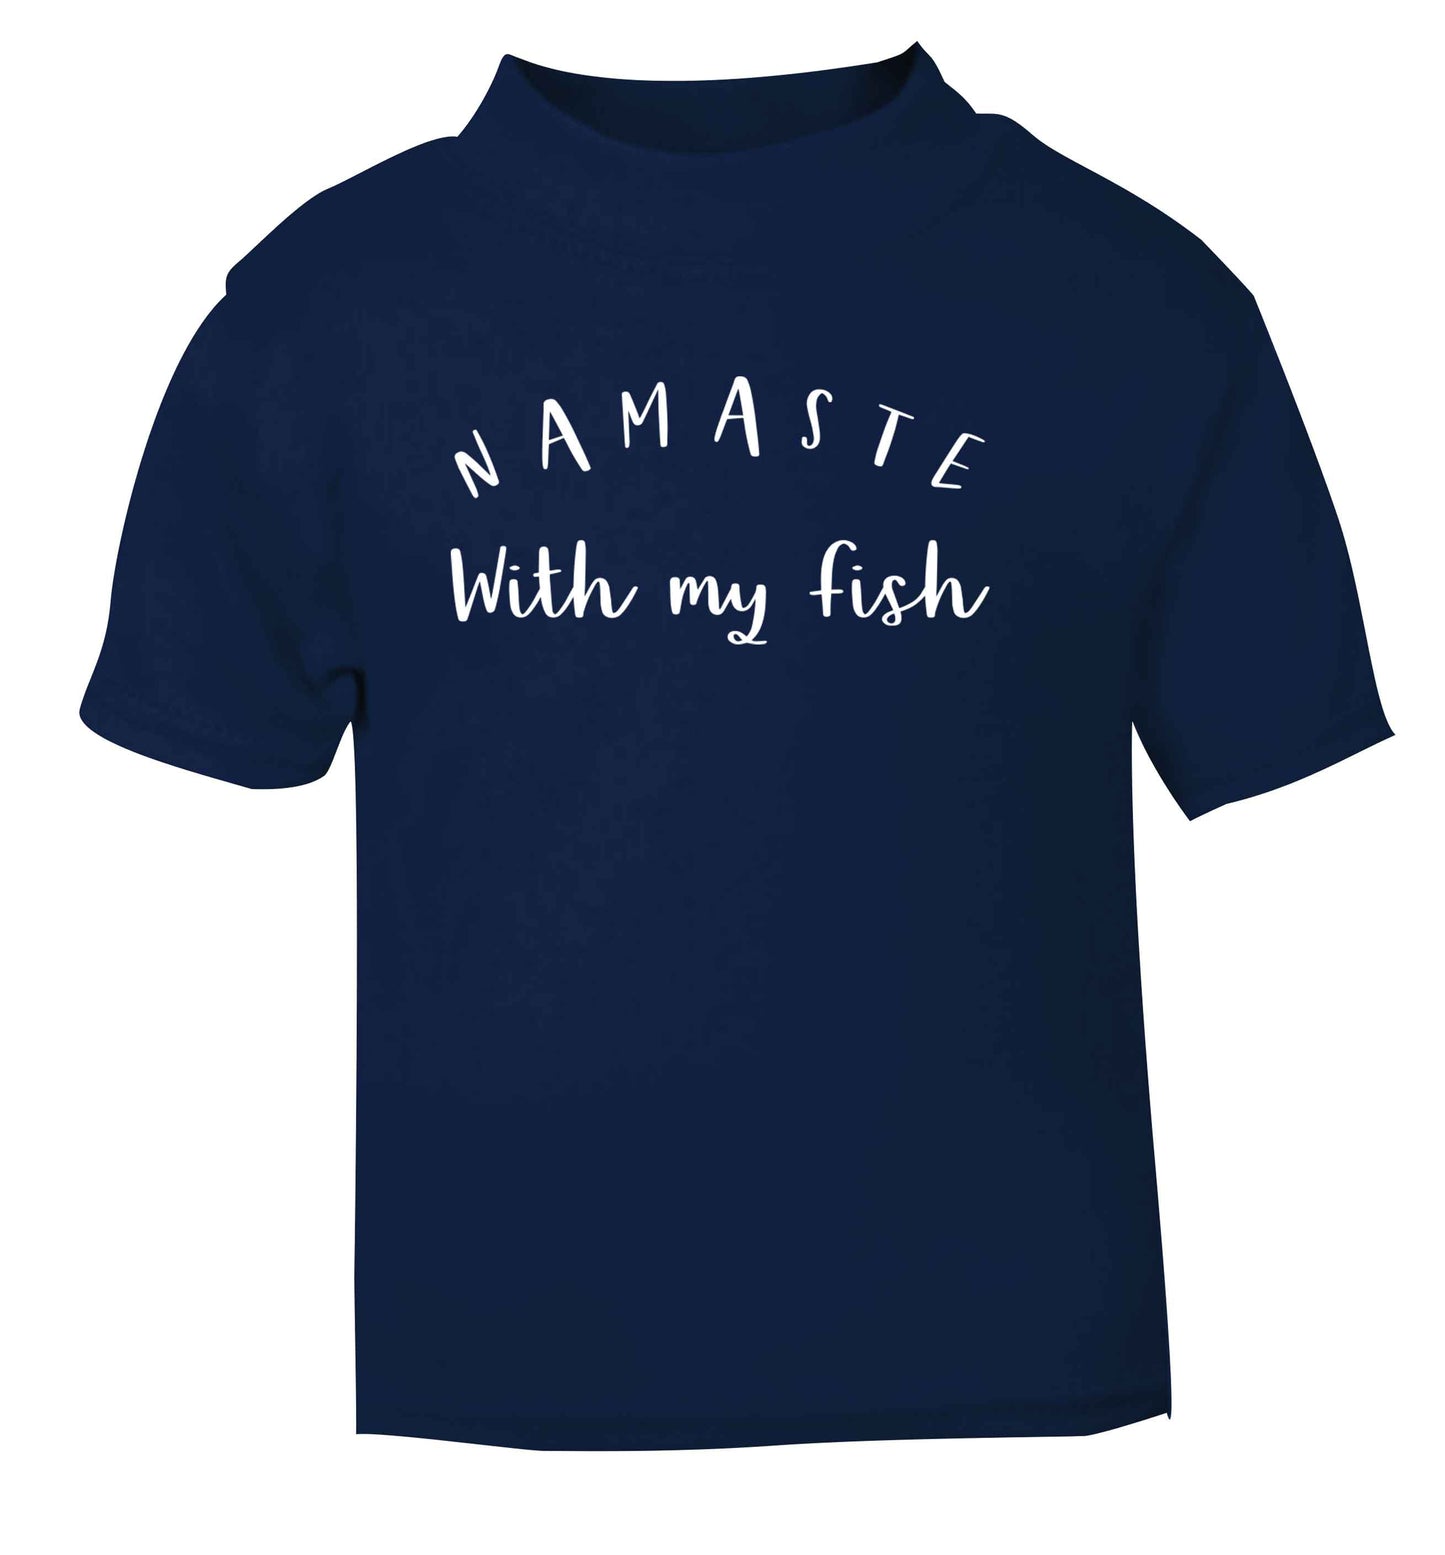 Namaste with my fish navy Baby Toddler Tshirt 2 Years